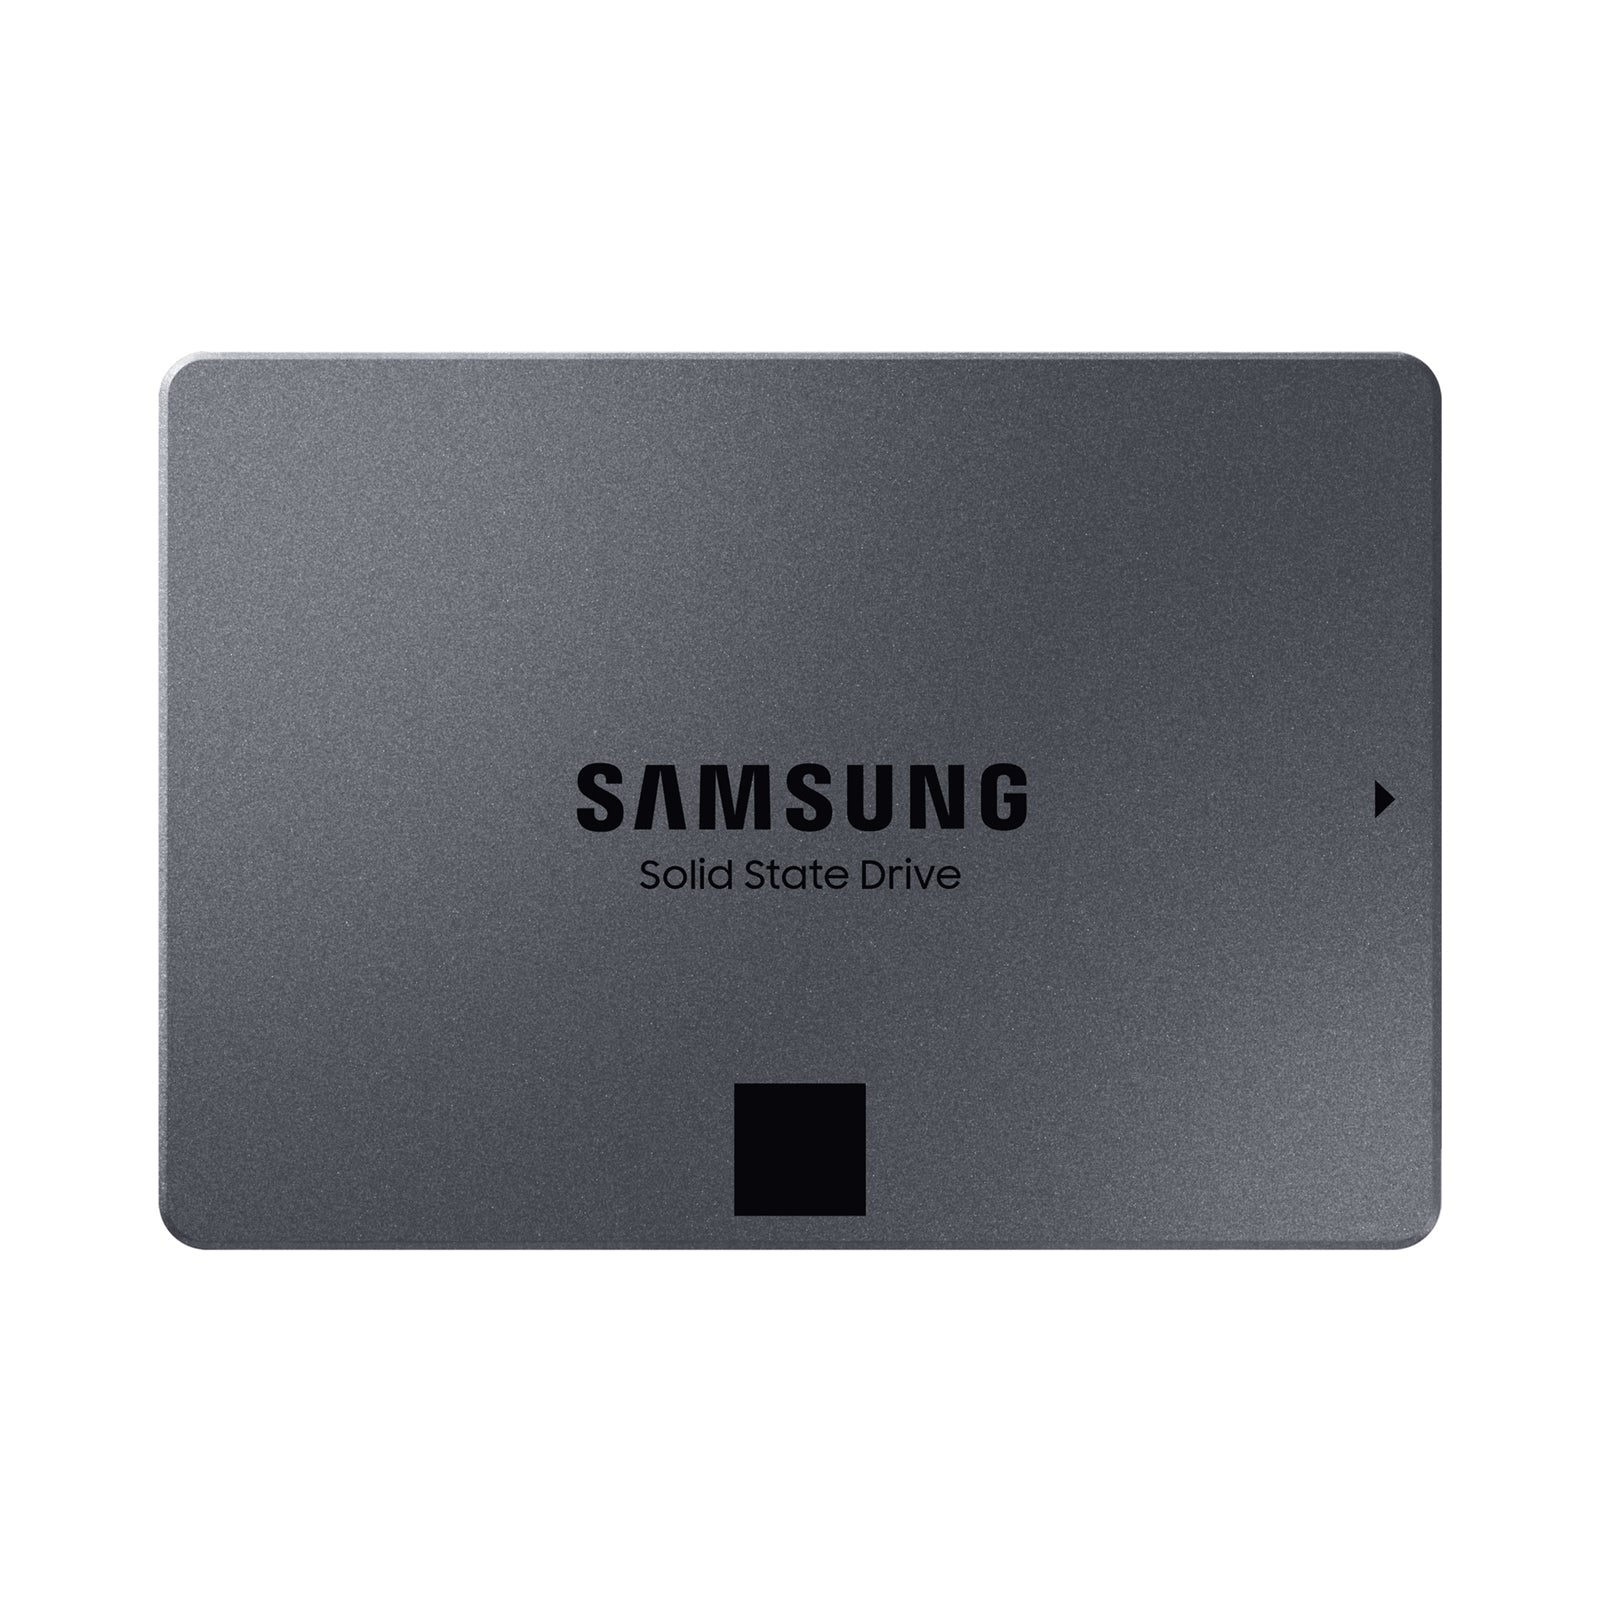 Samsung 870 QVO 1TB SSD High-Speed SATA III Interface with V-NAND Technology